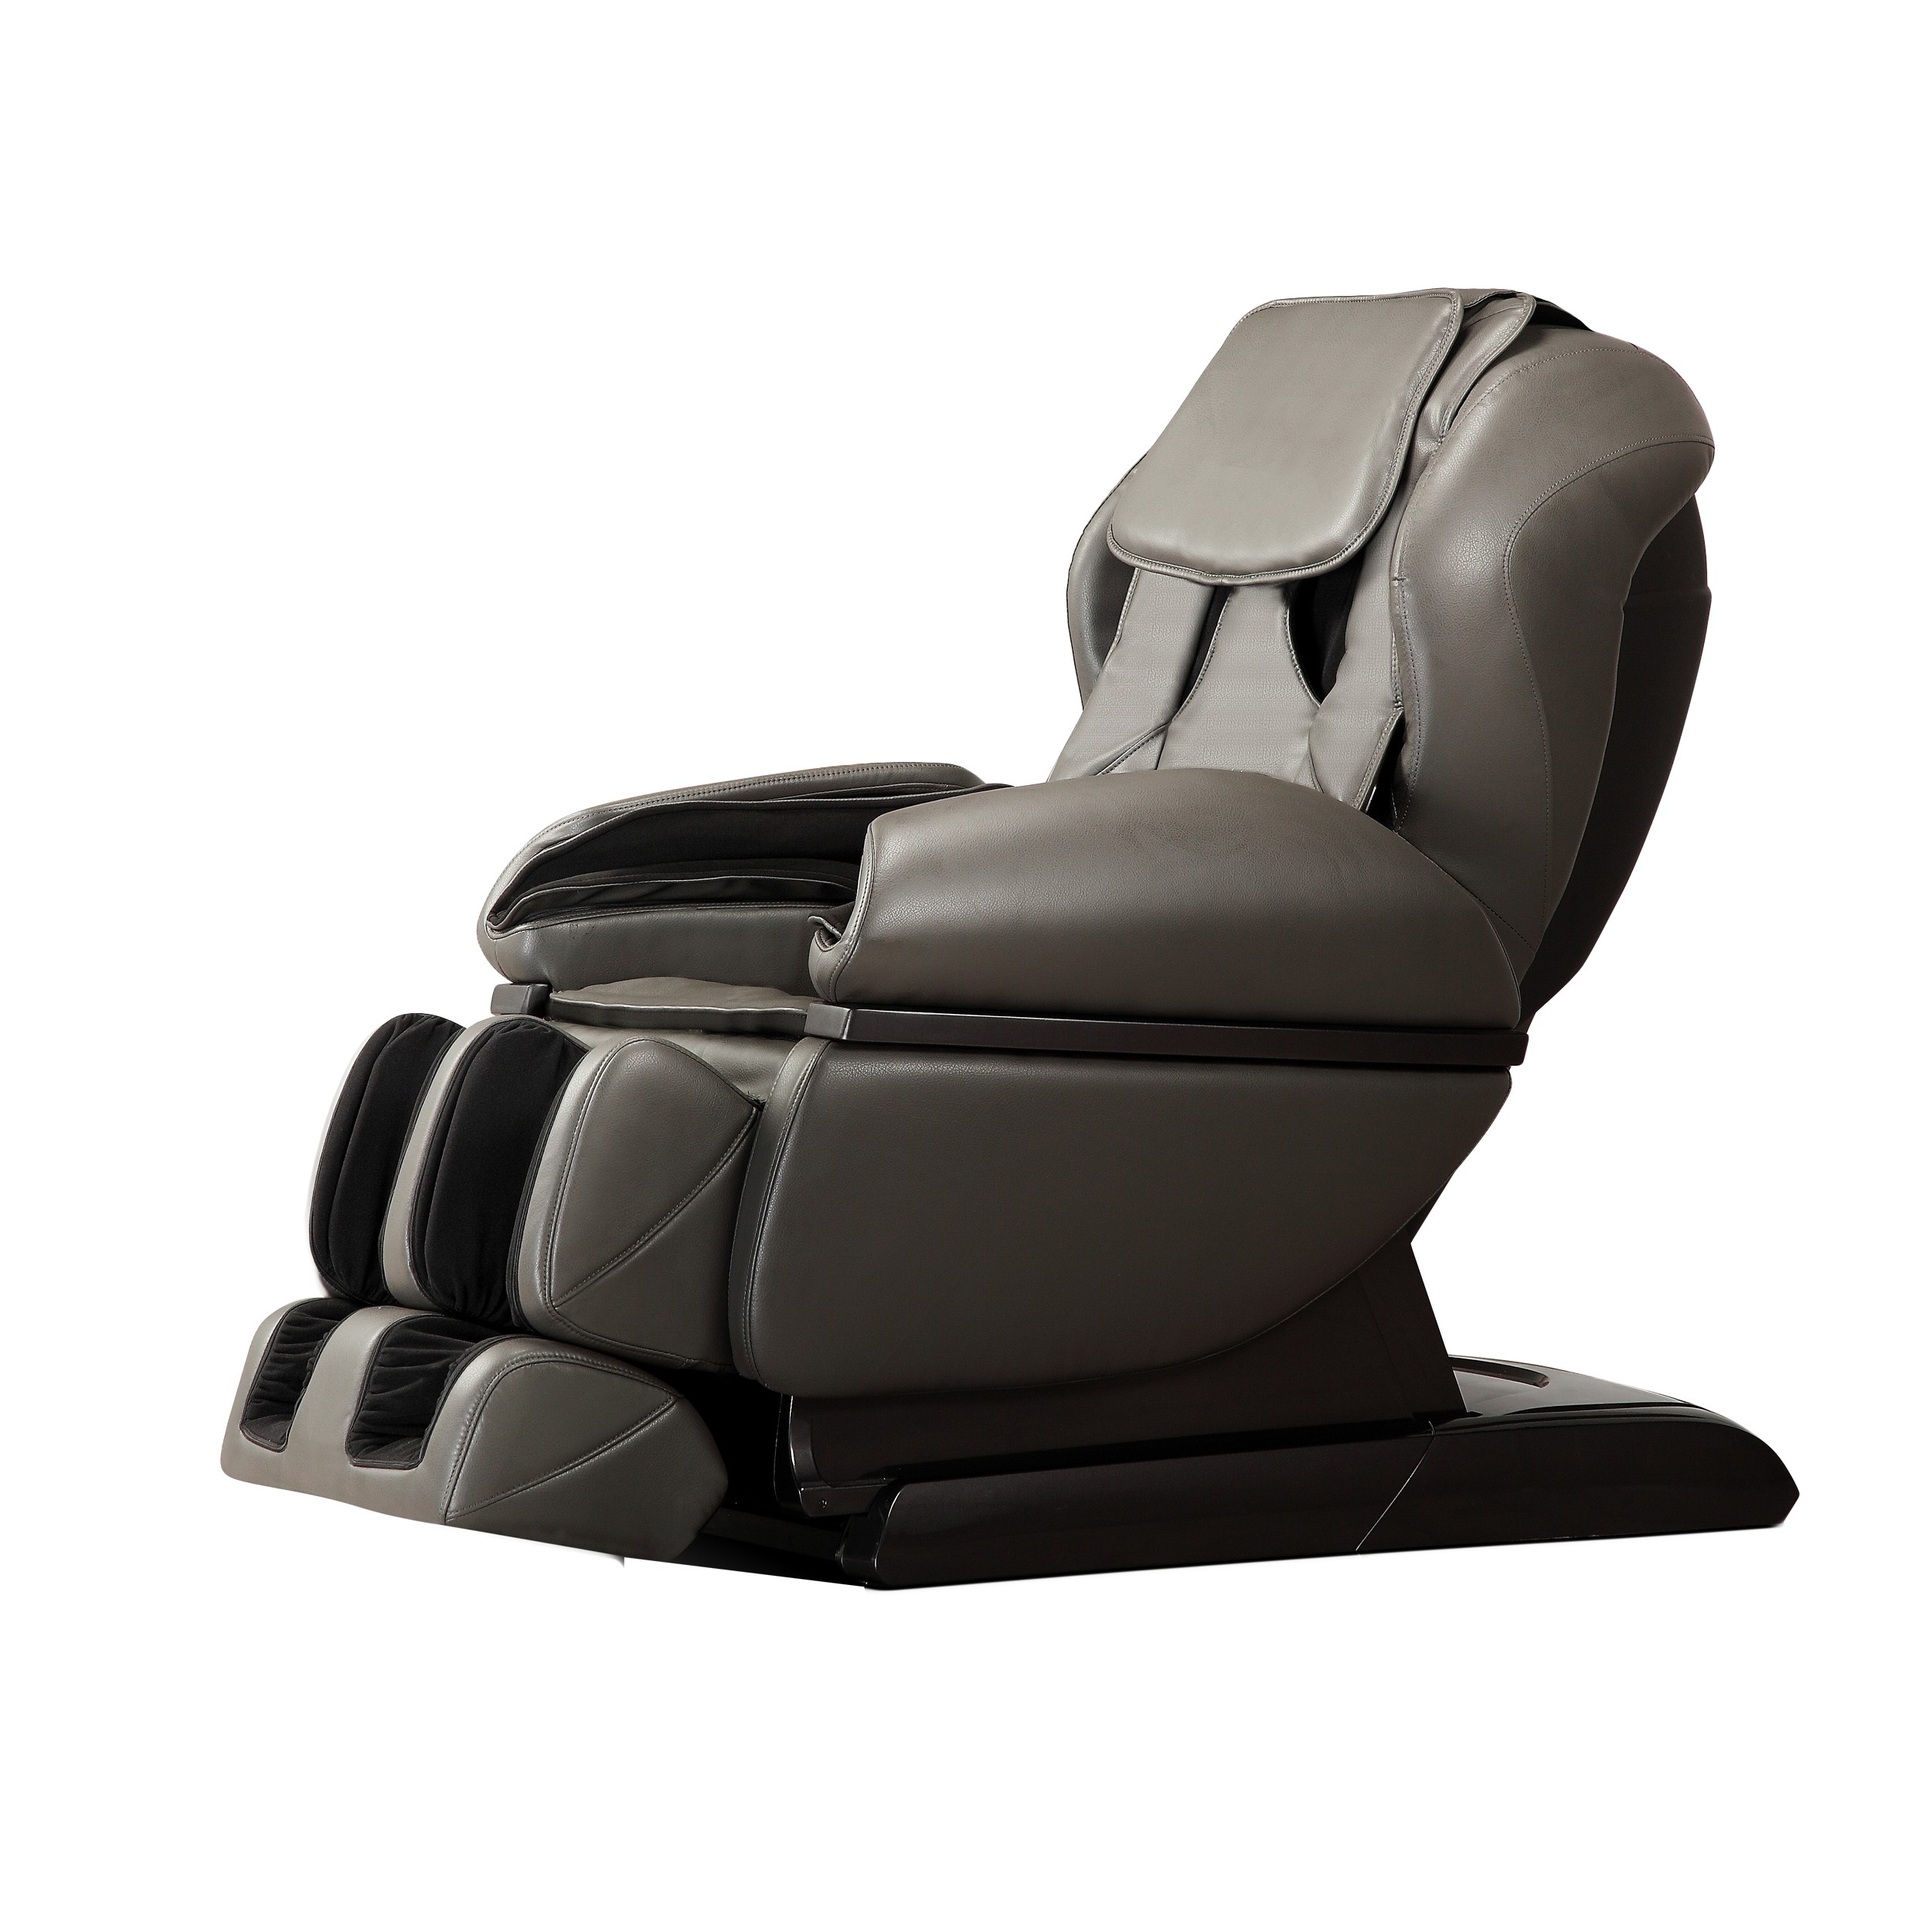 Reclining Adjustable Width Heated Massage Chair